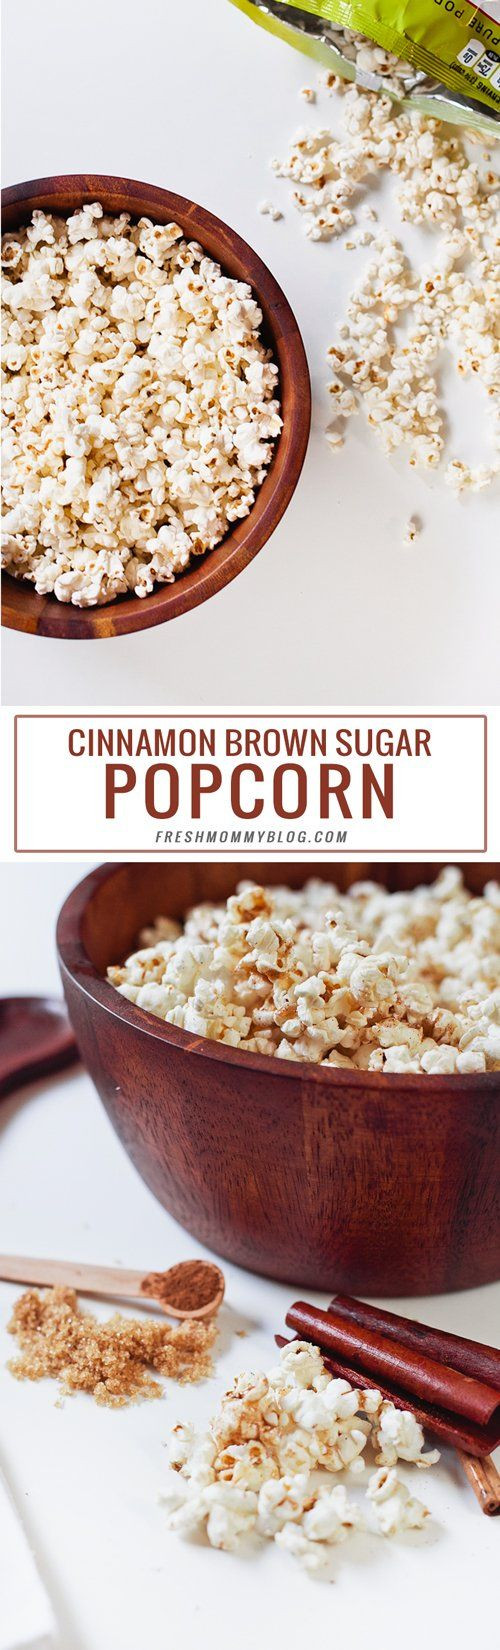 Low Calorie Popcorn Recipes
 Best 25 Christmas popcorn ideas on Pinterest